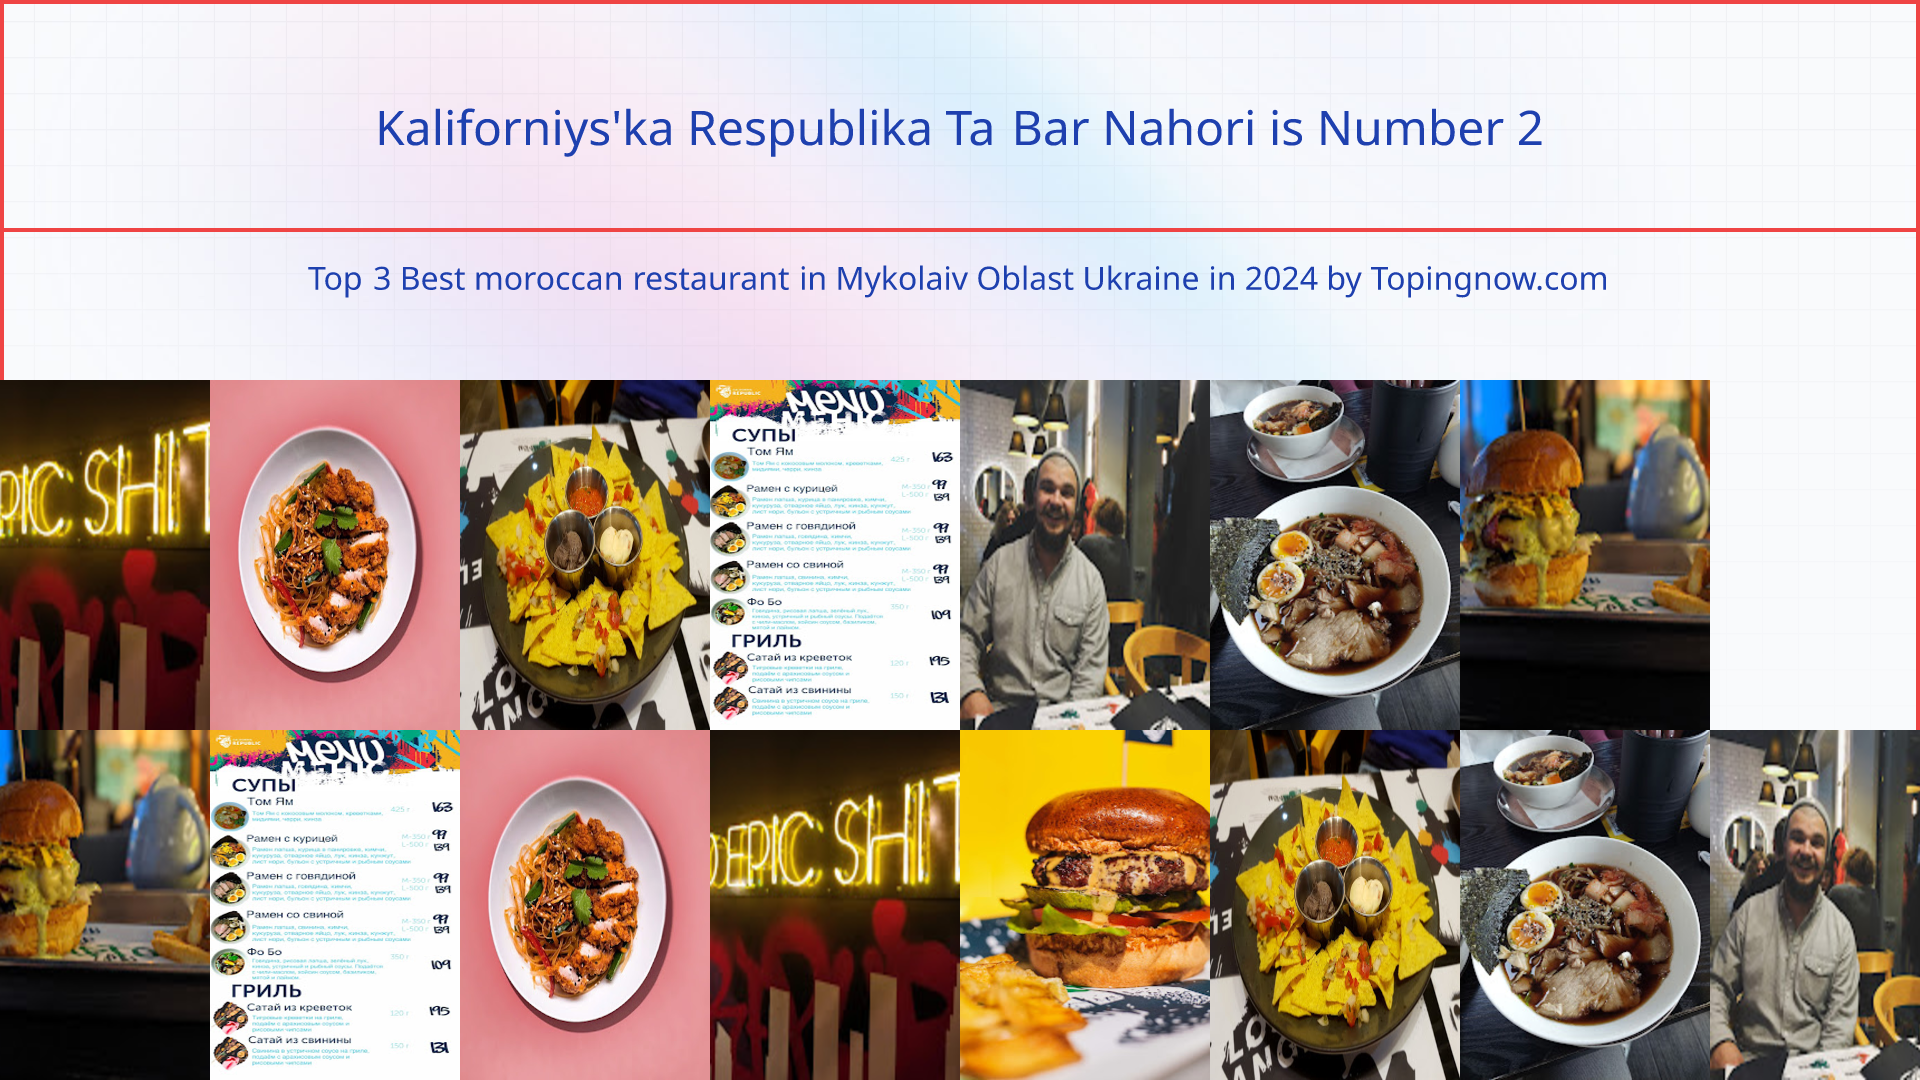 Kaliforniys'ka Respublika Ta Bar Nahori: Top 3 Best moroccan restaurant in Mykolaiv Oblast Ukraine in 2024